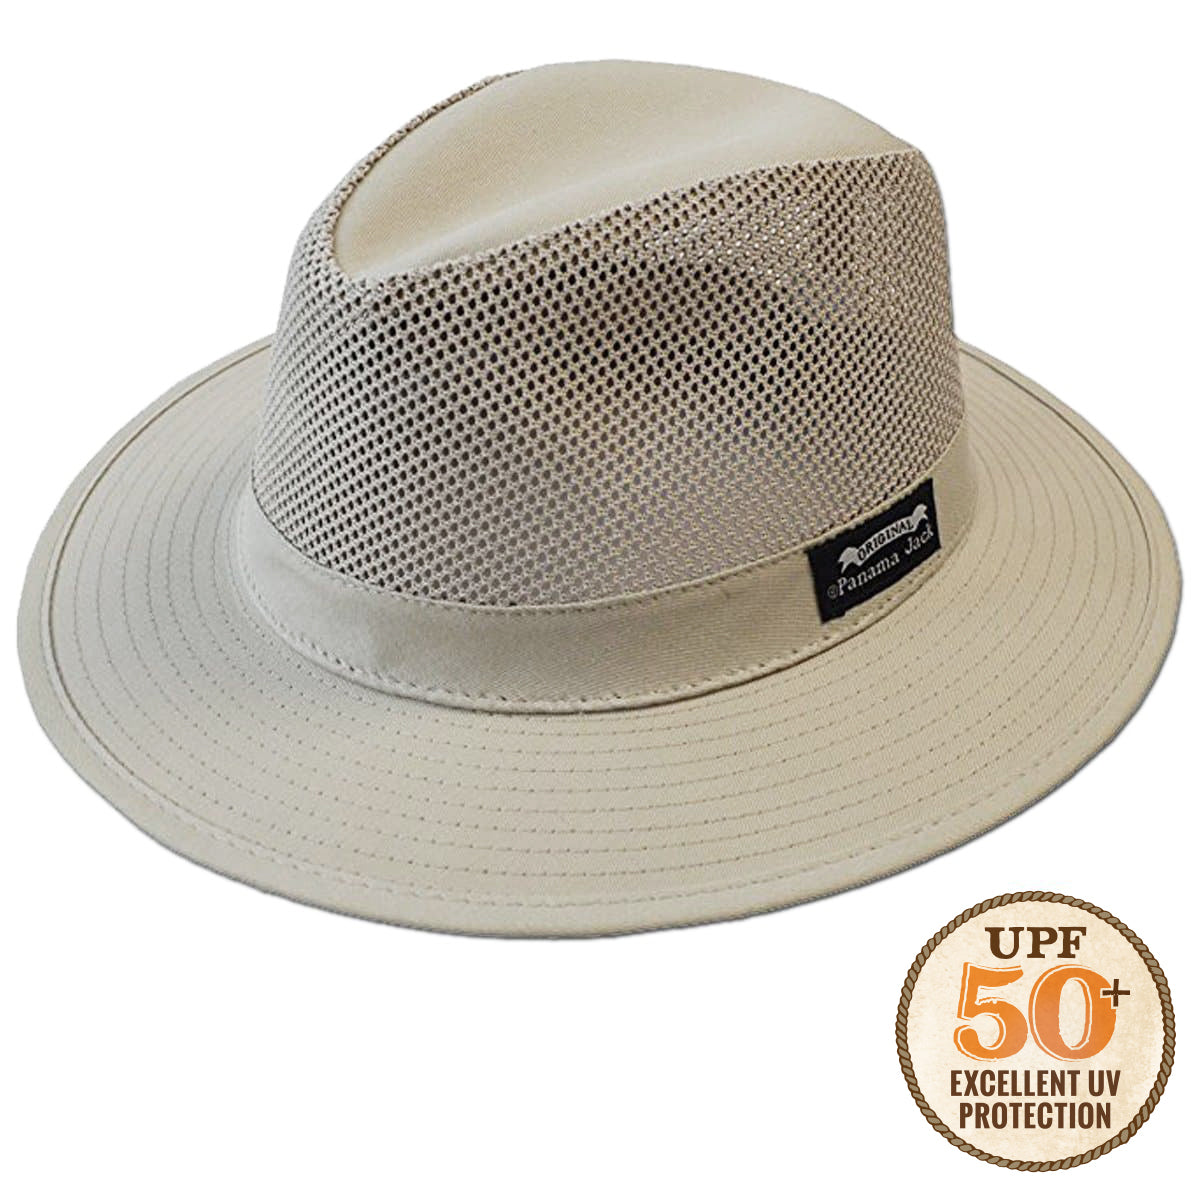 Panama Jack Crown Pocket Hat - Lightweight, Packable, UPF 50+ UVA/UVB Sun  Protection, 2 3/4 Brim, Neck Drape Covering (Navy, Small/Medium) 